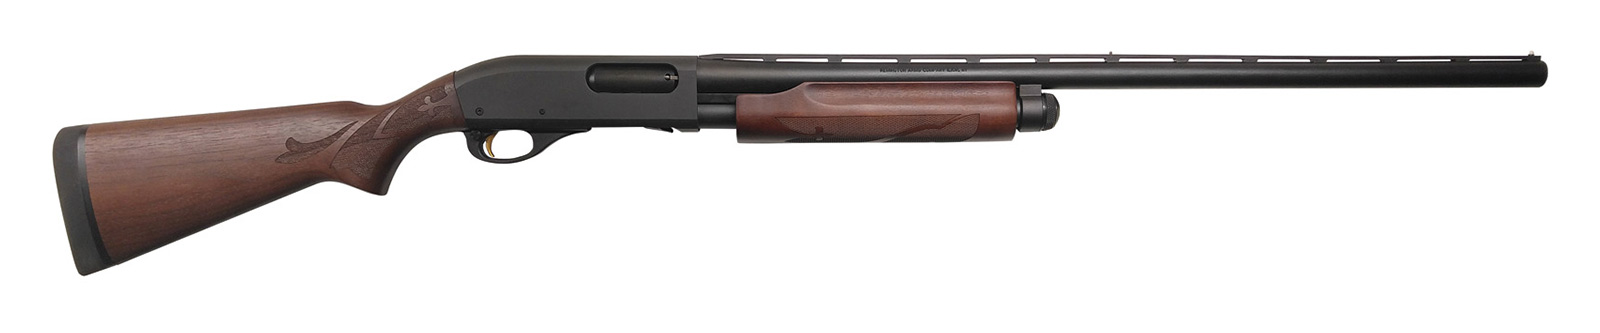 remington-870-sportman-12g-28-5rd-d-fblu-wlnt-pump